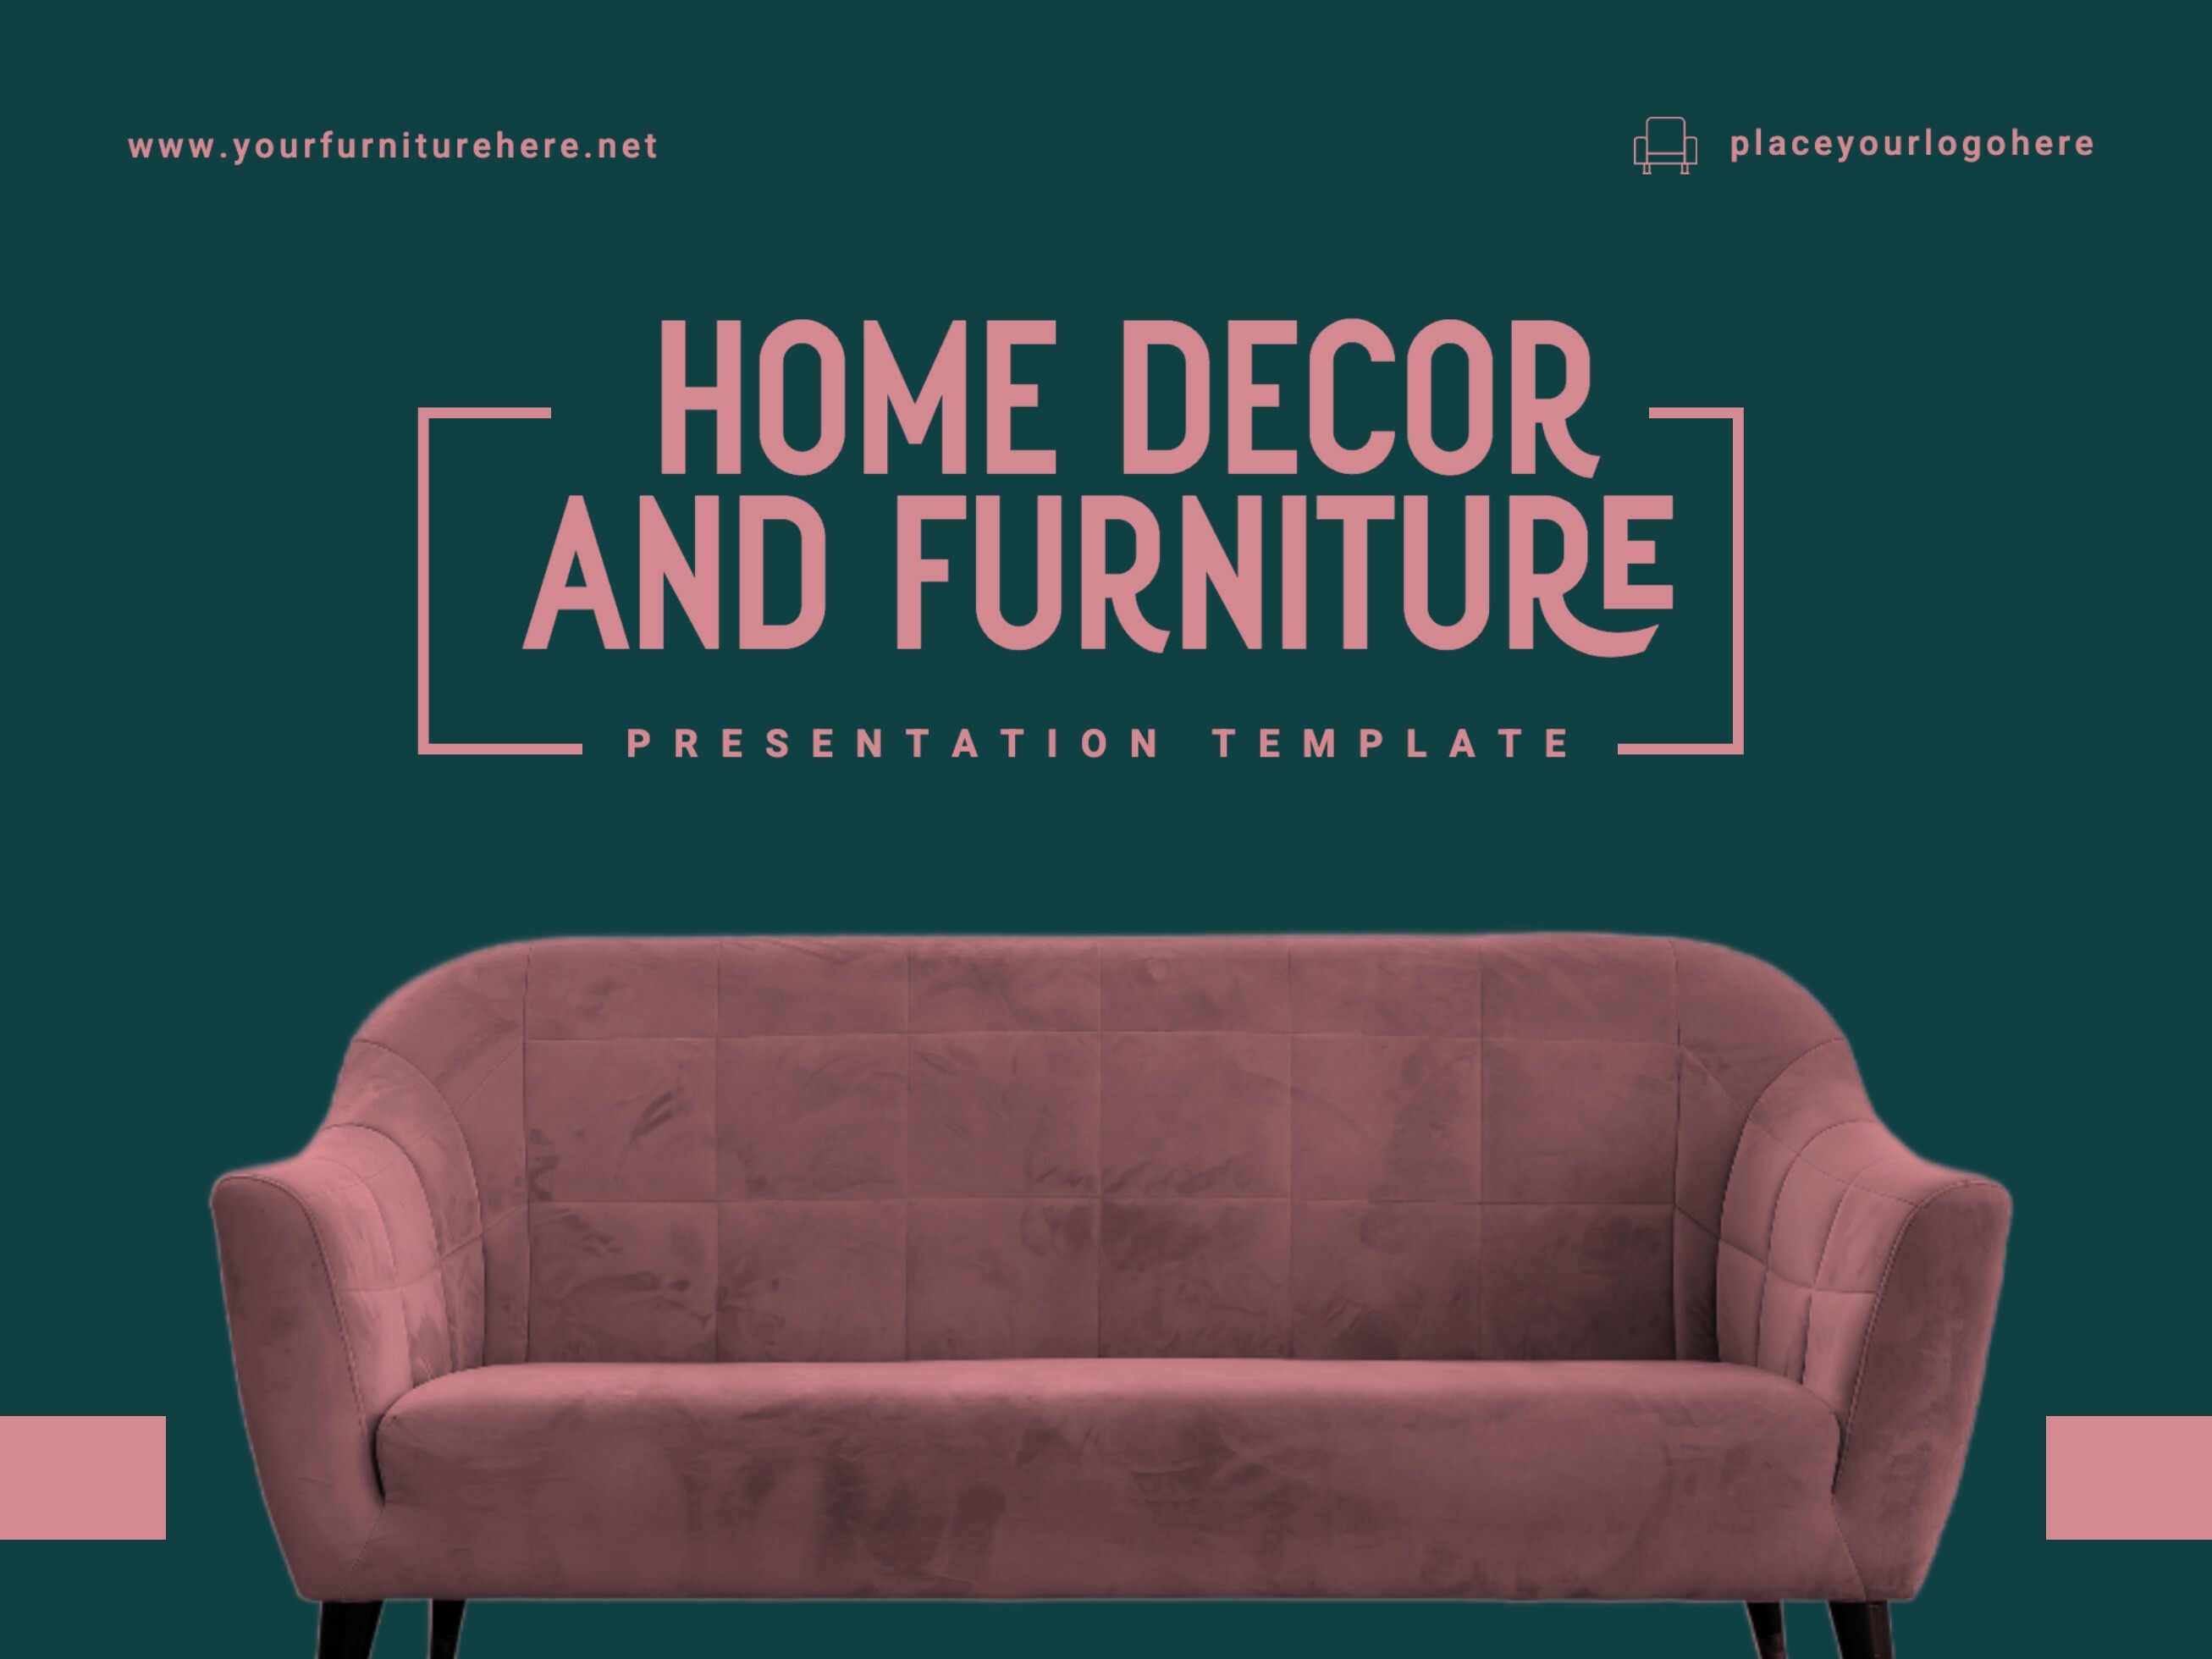 Home Decor and Furniture Presentation Template